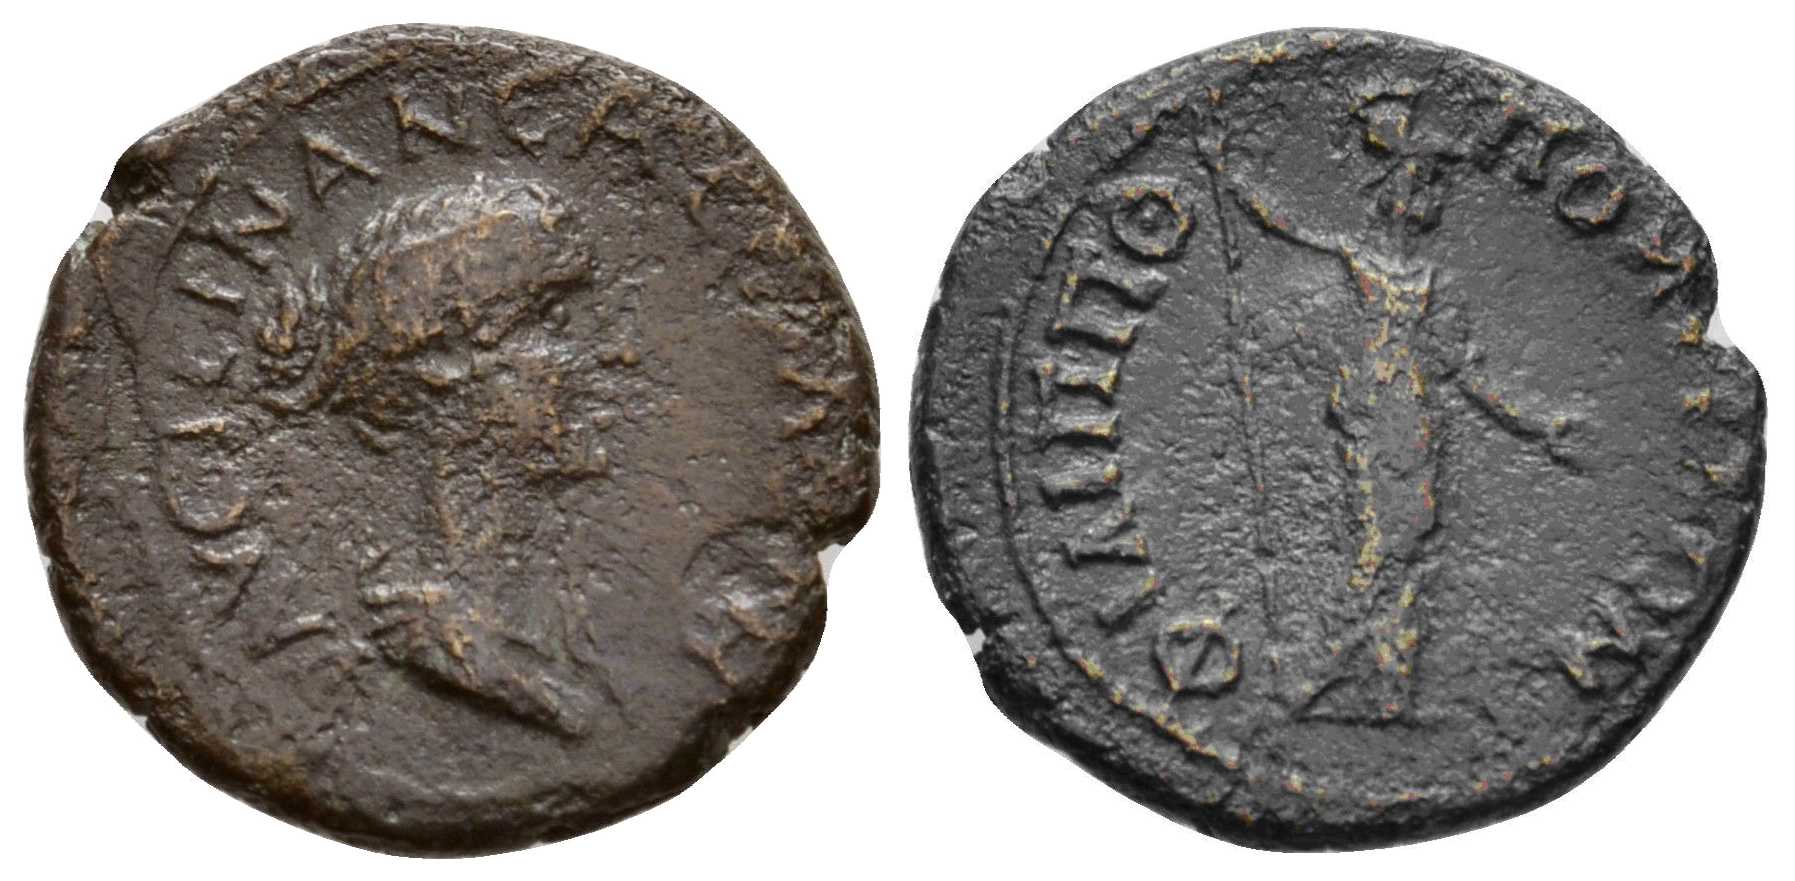 6186 Philippopolis Thracia Faustina jr. AE